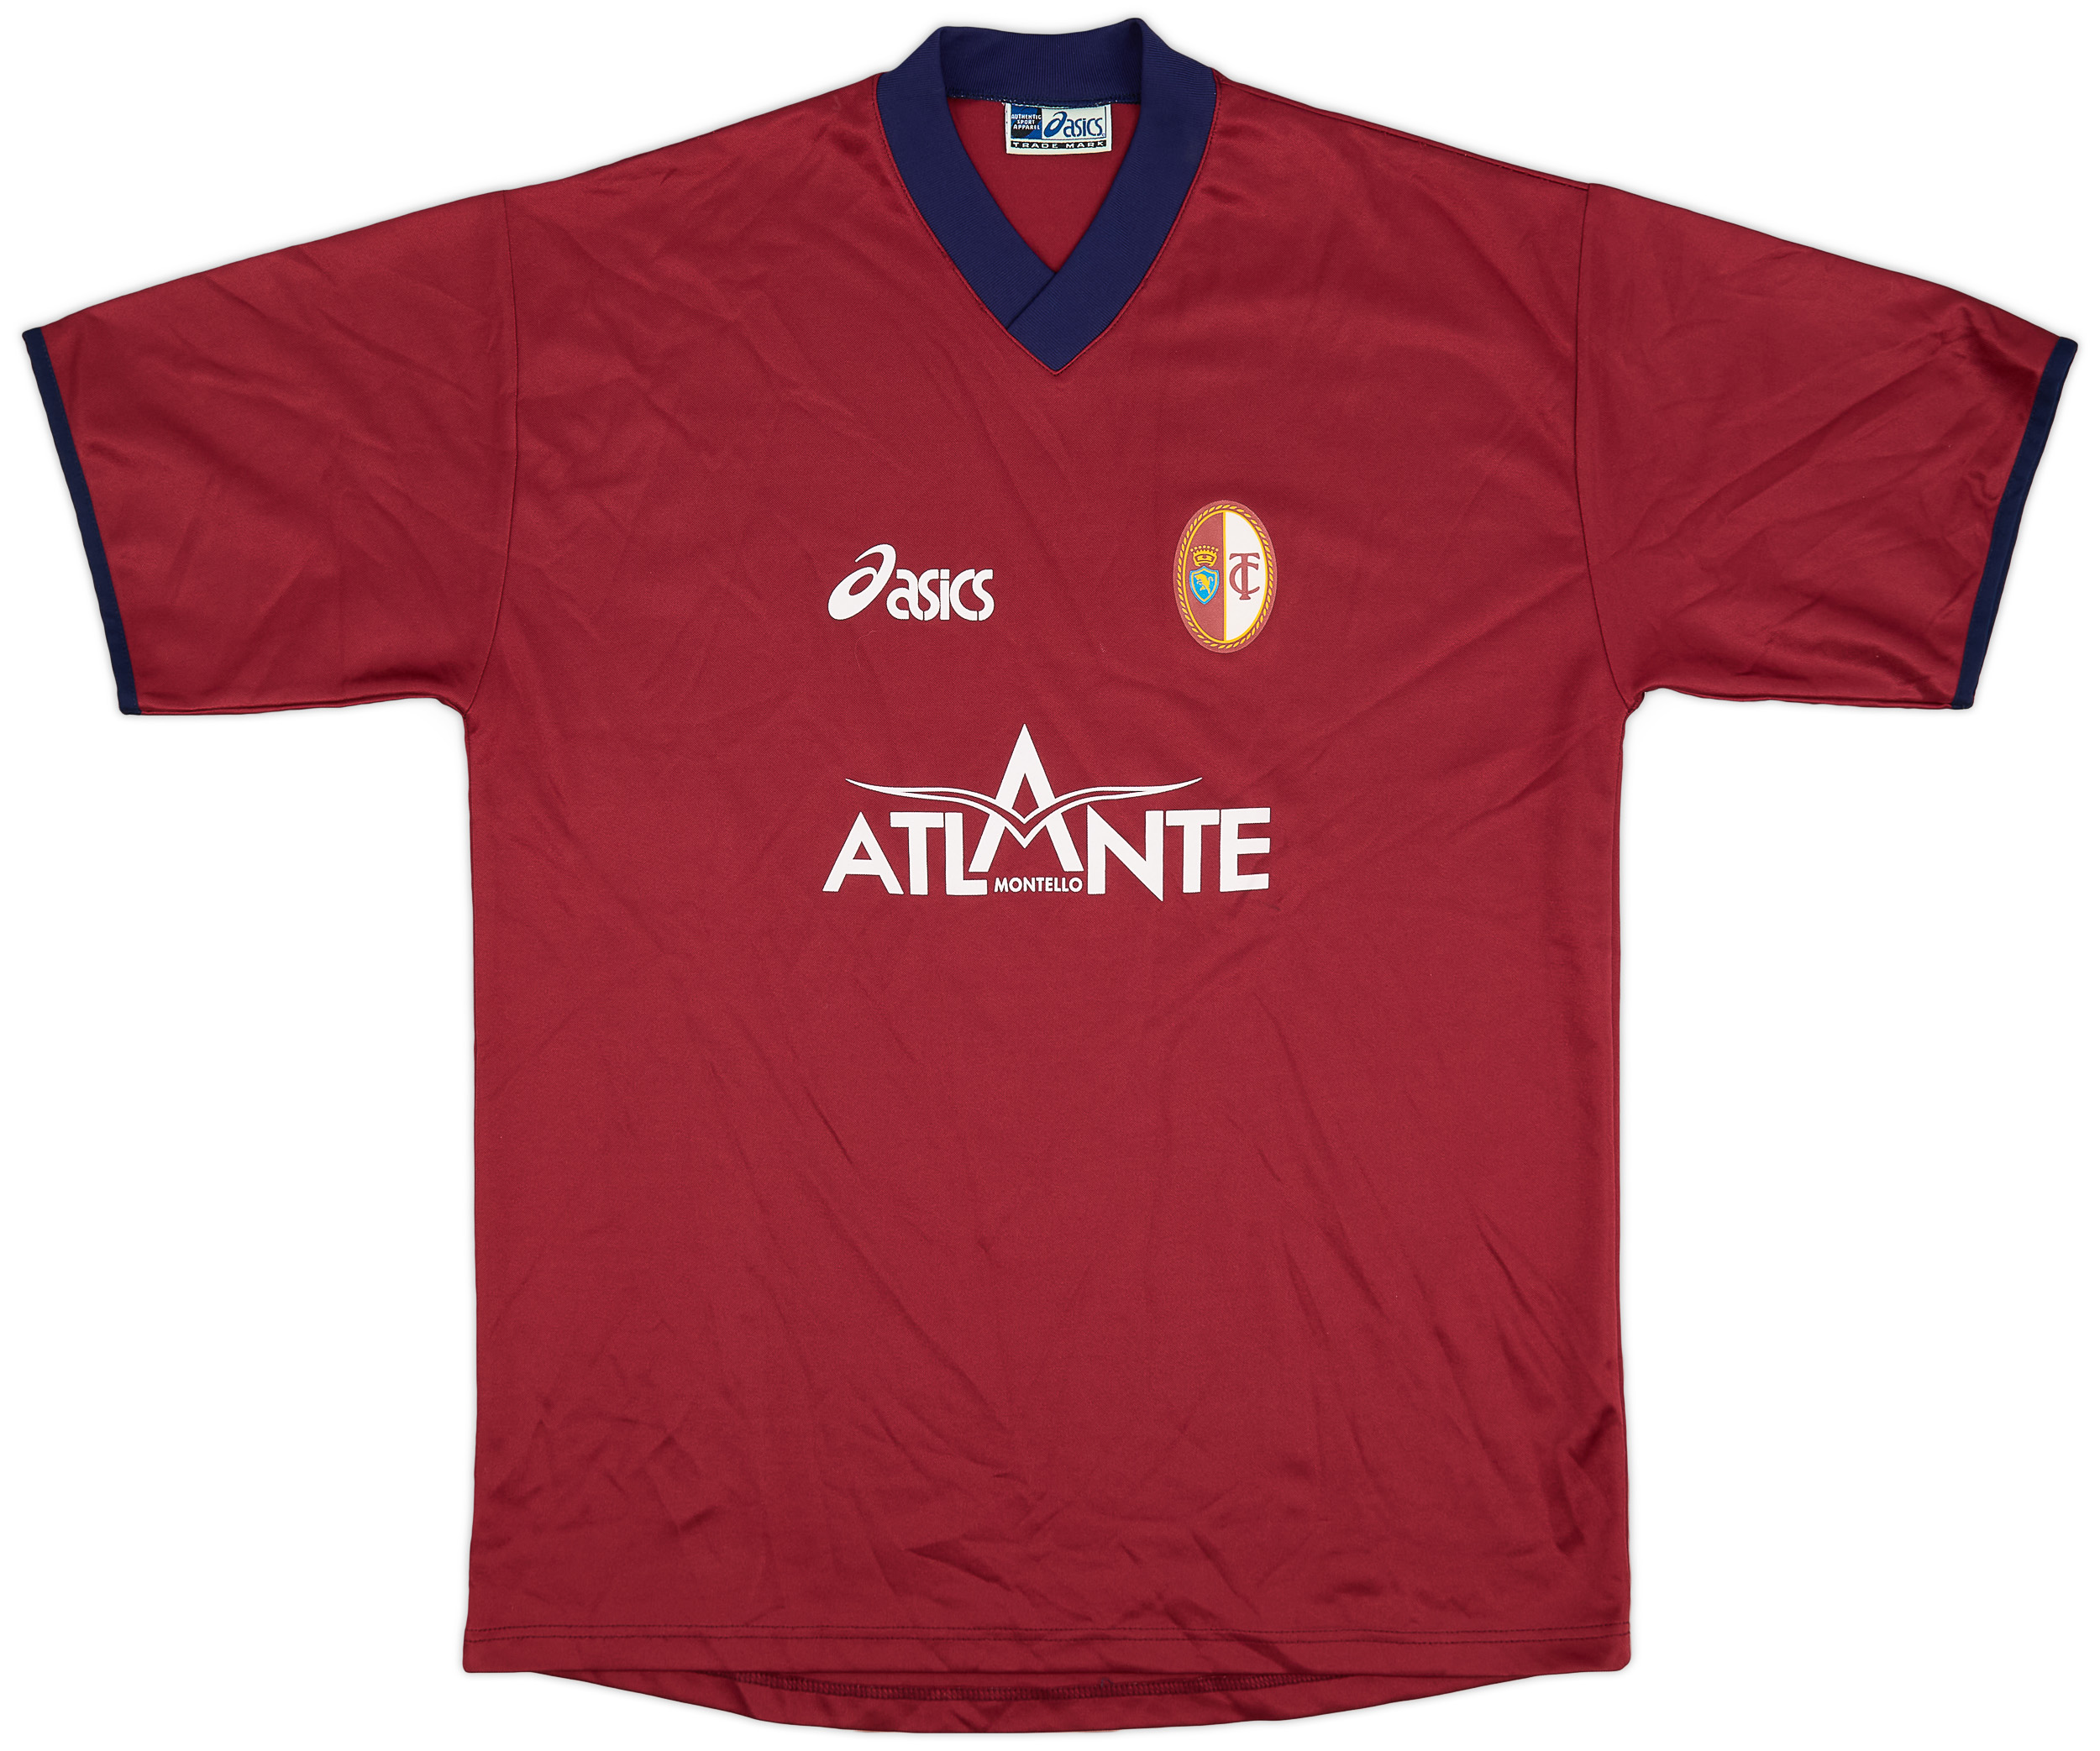 2003-04 Torino Basic Home Shirt - 7/10 - ()